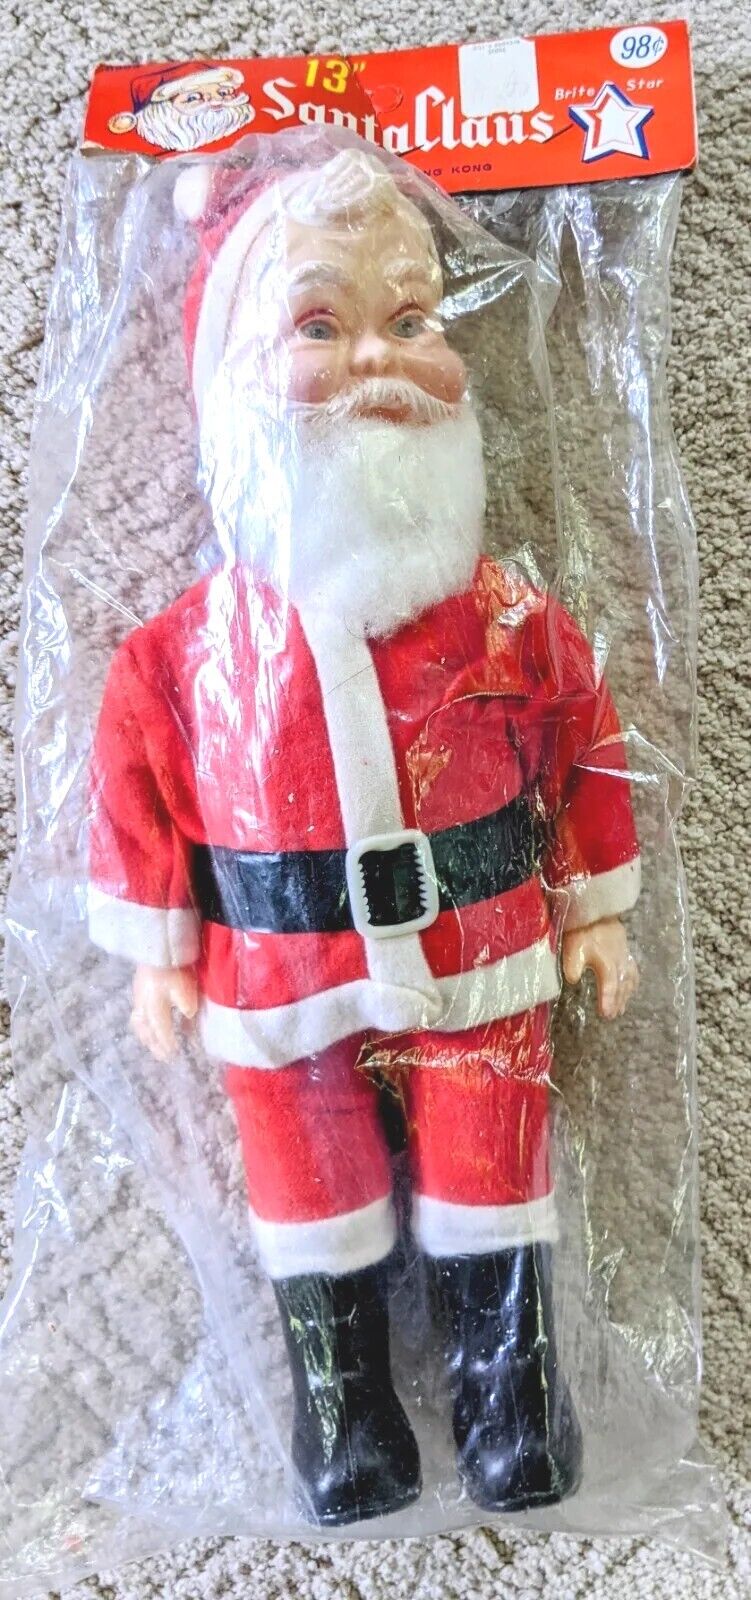 New NOS Vintage Hong Kong Christmas Santa Claus In Package Brite Star